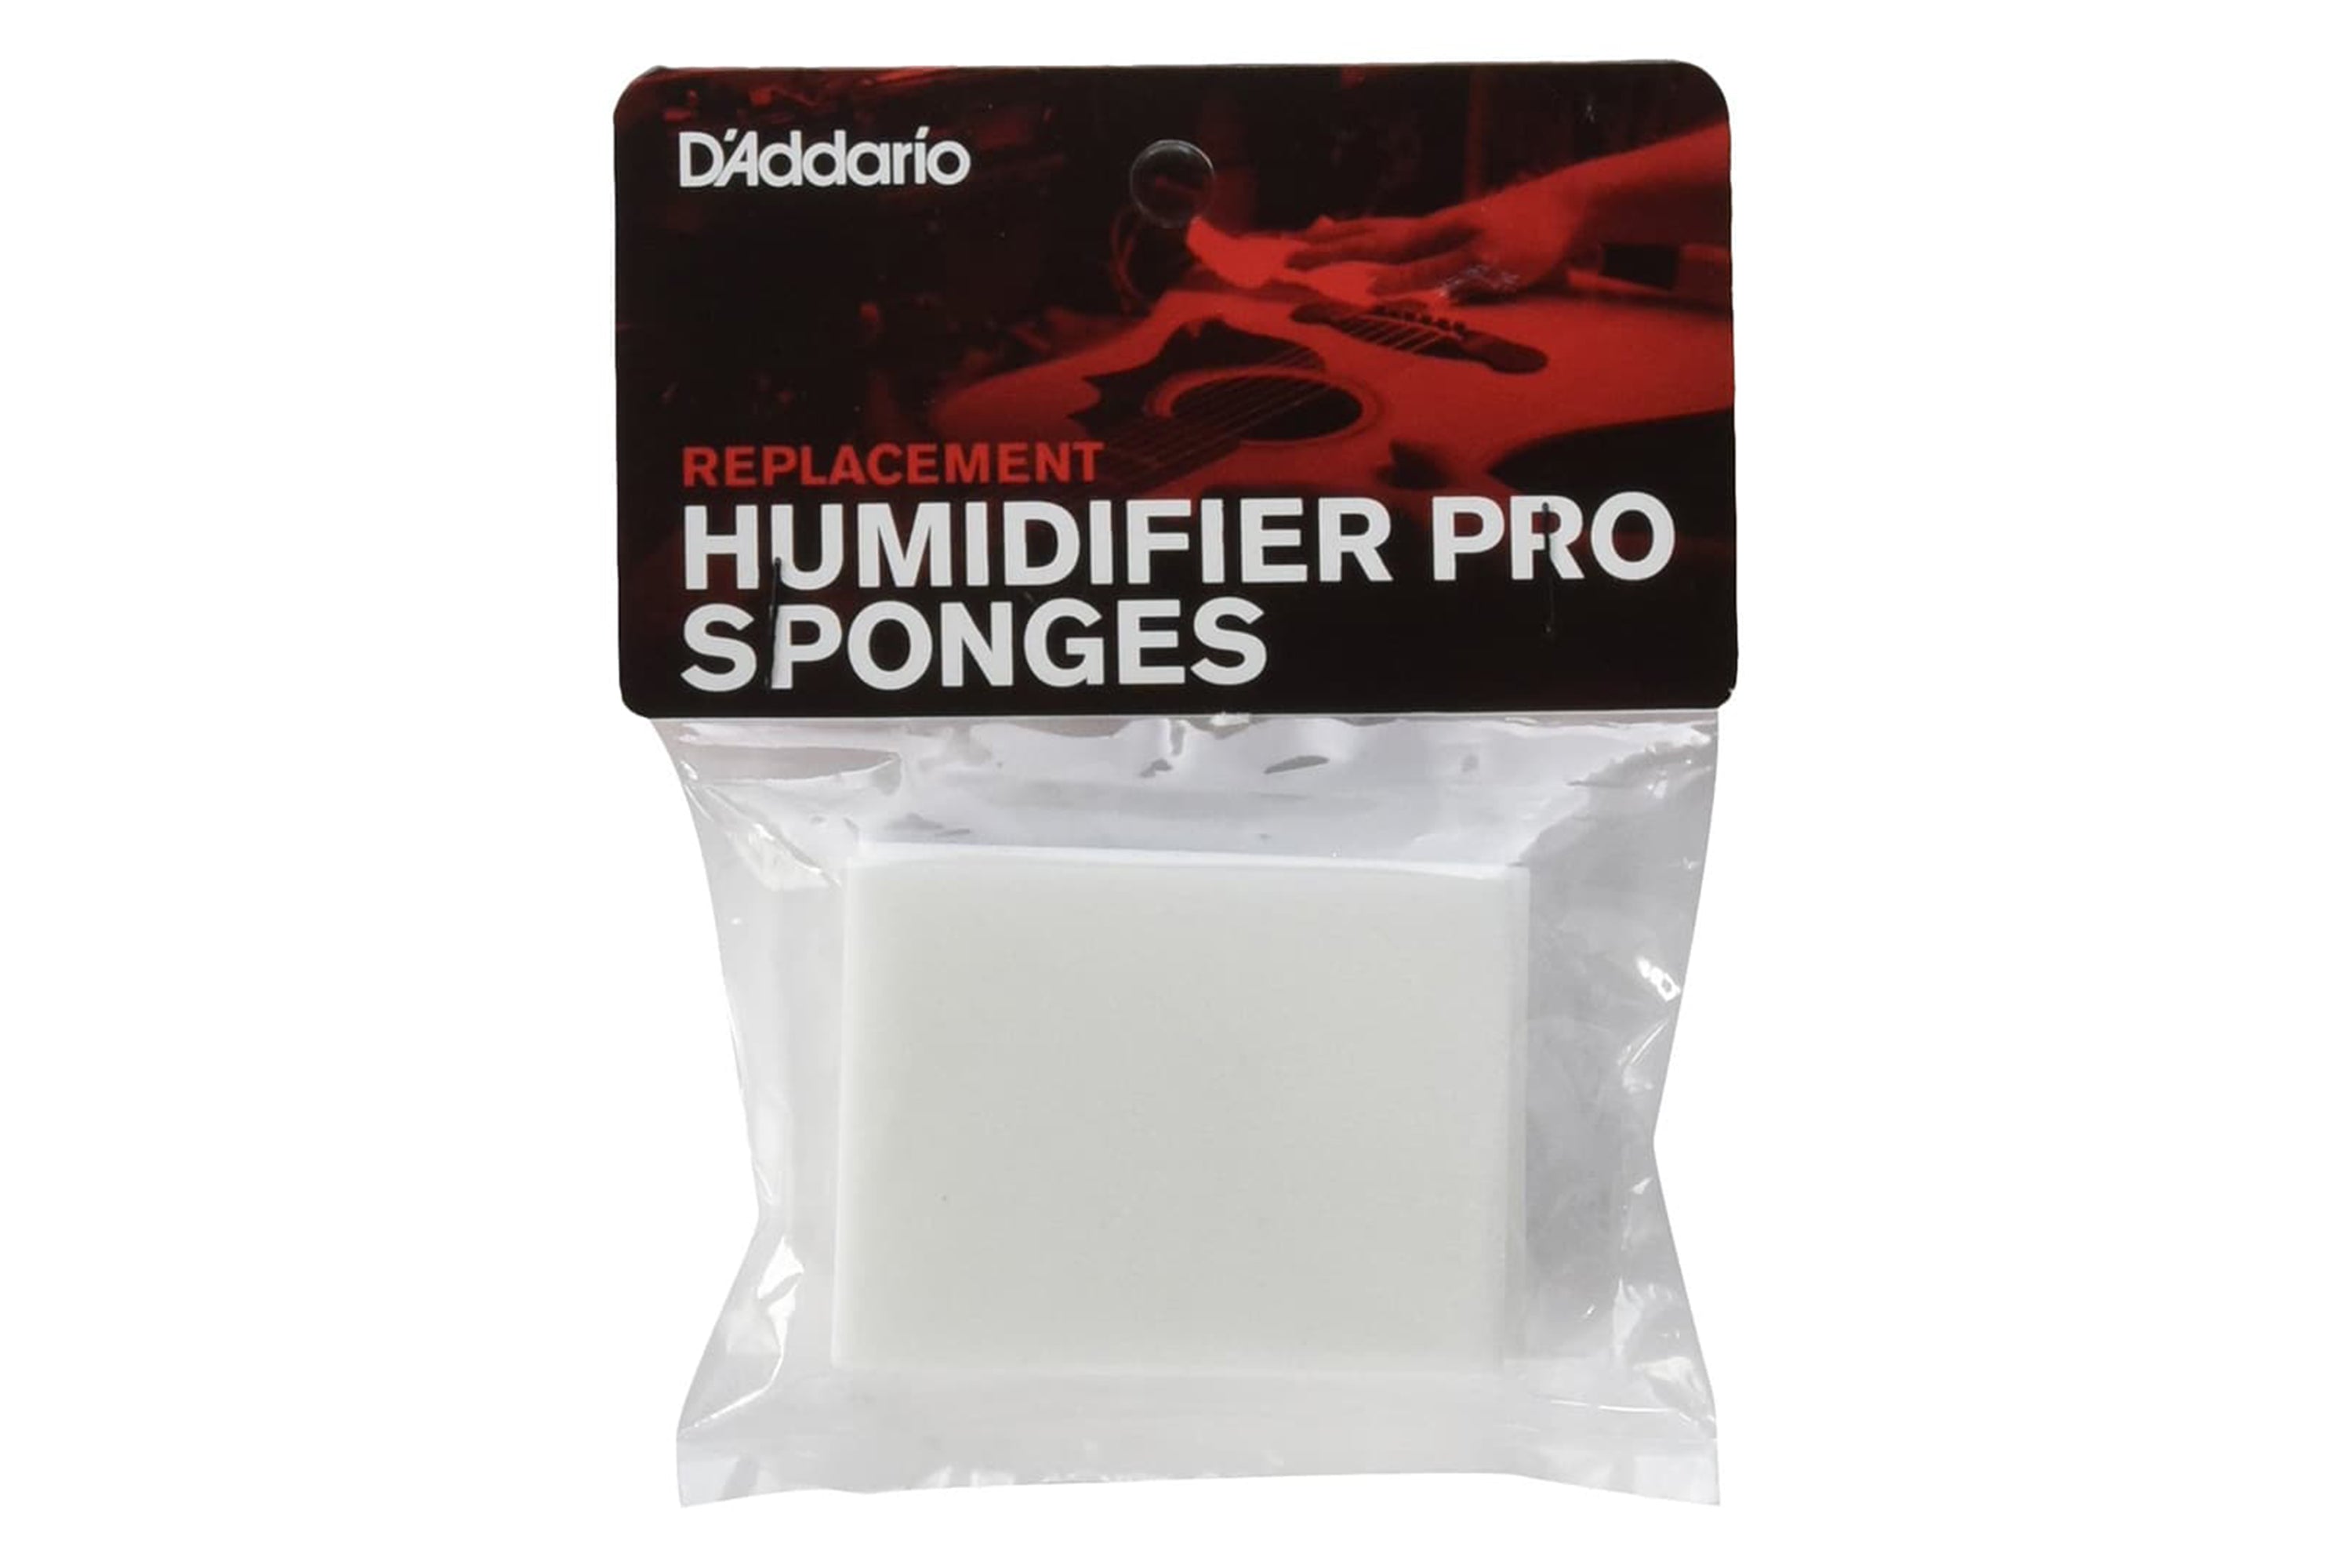 D'addario Guitar Humidifier Pro Replacement Sponge (2 PACK)